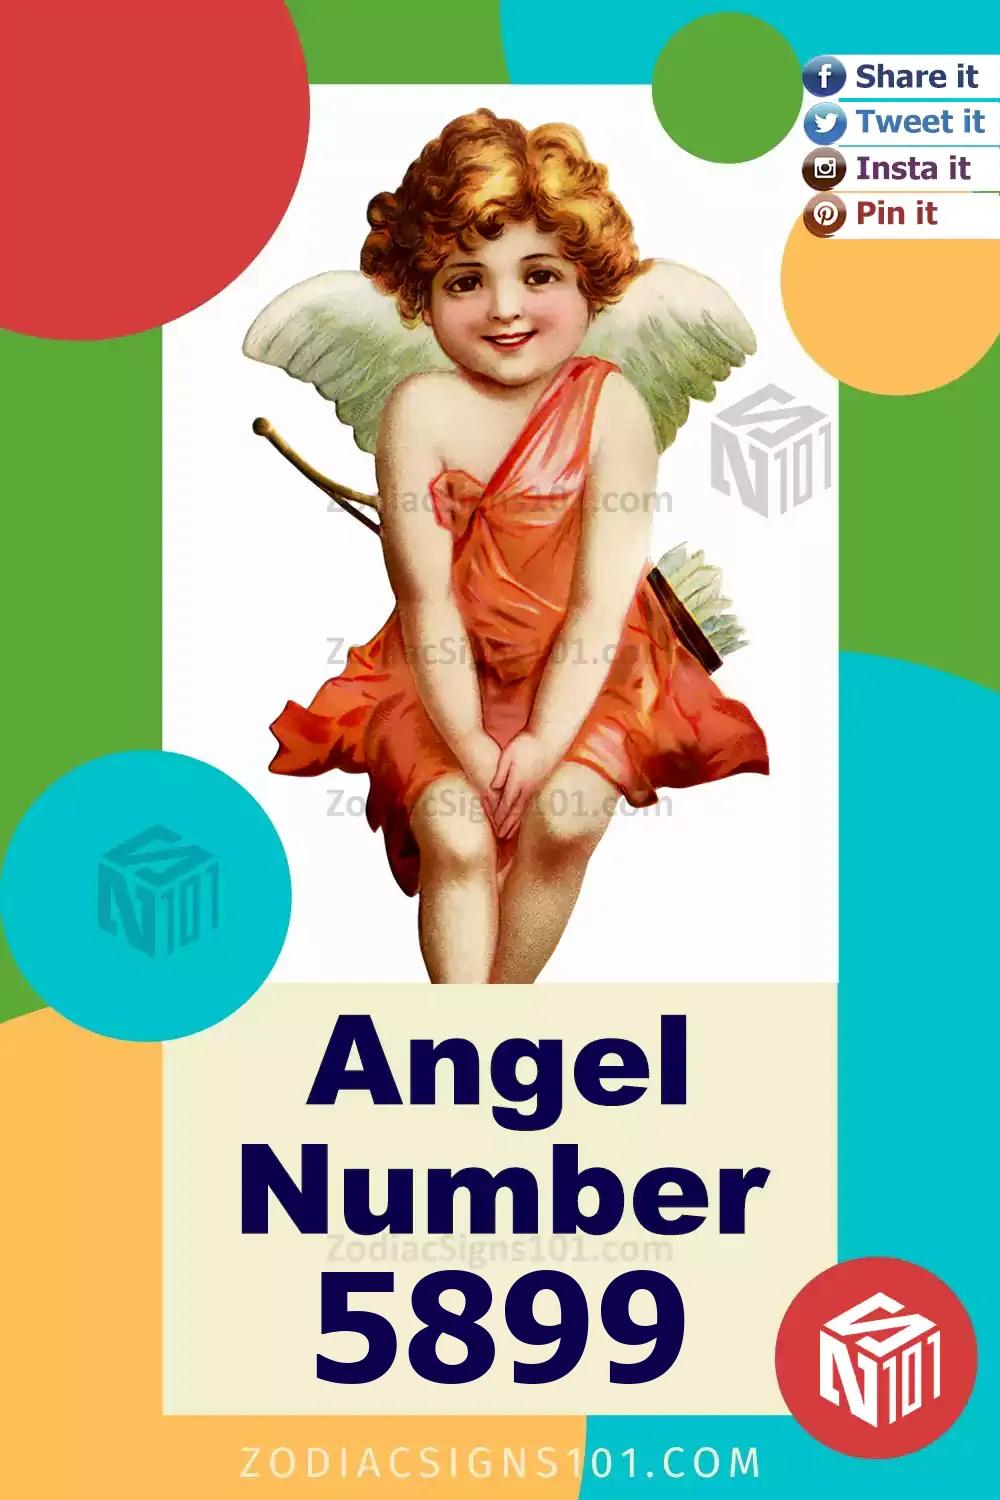 5899-Angel-Number-Meaning.jpg